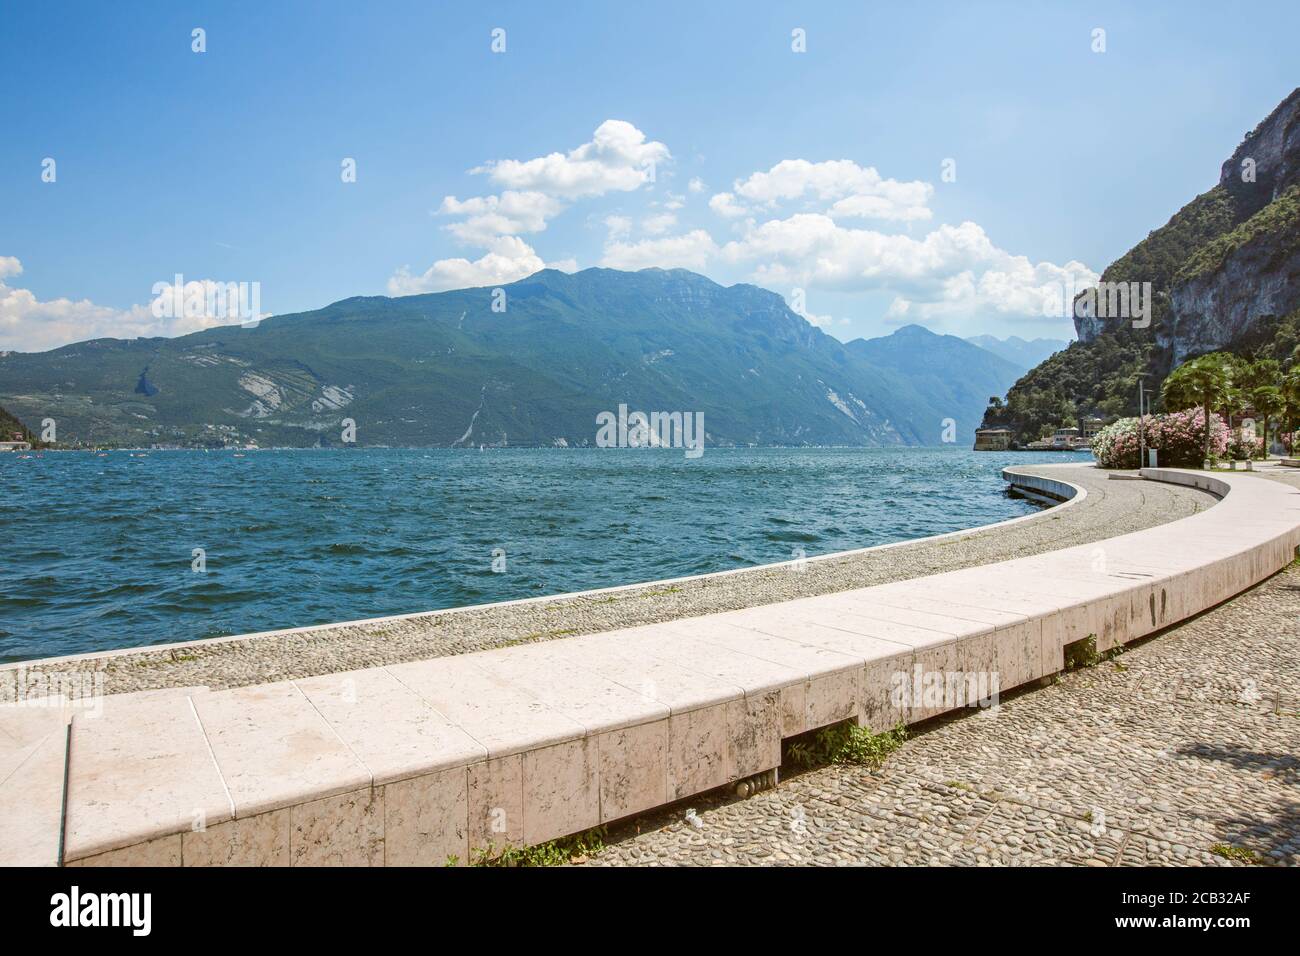 Promenade of lake Garda,  Italy stock photo with no people Stock Photo